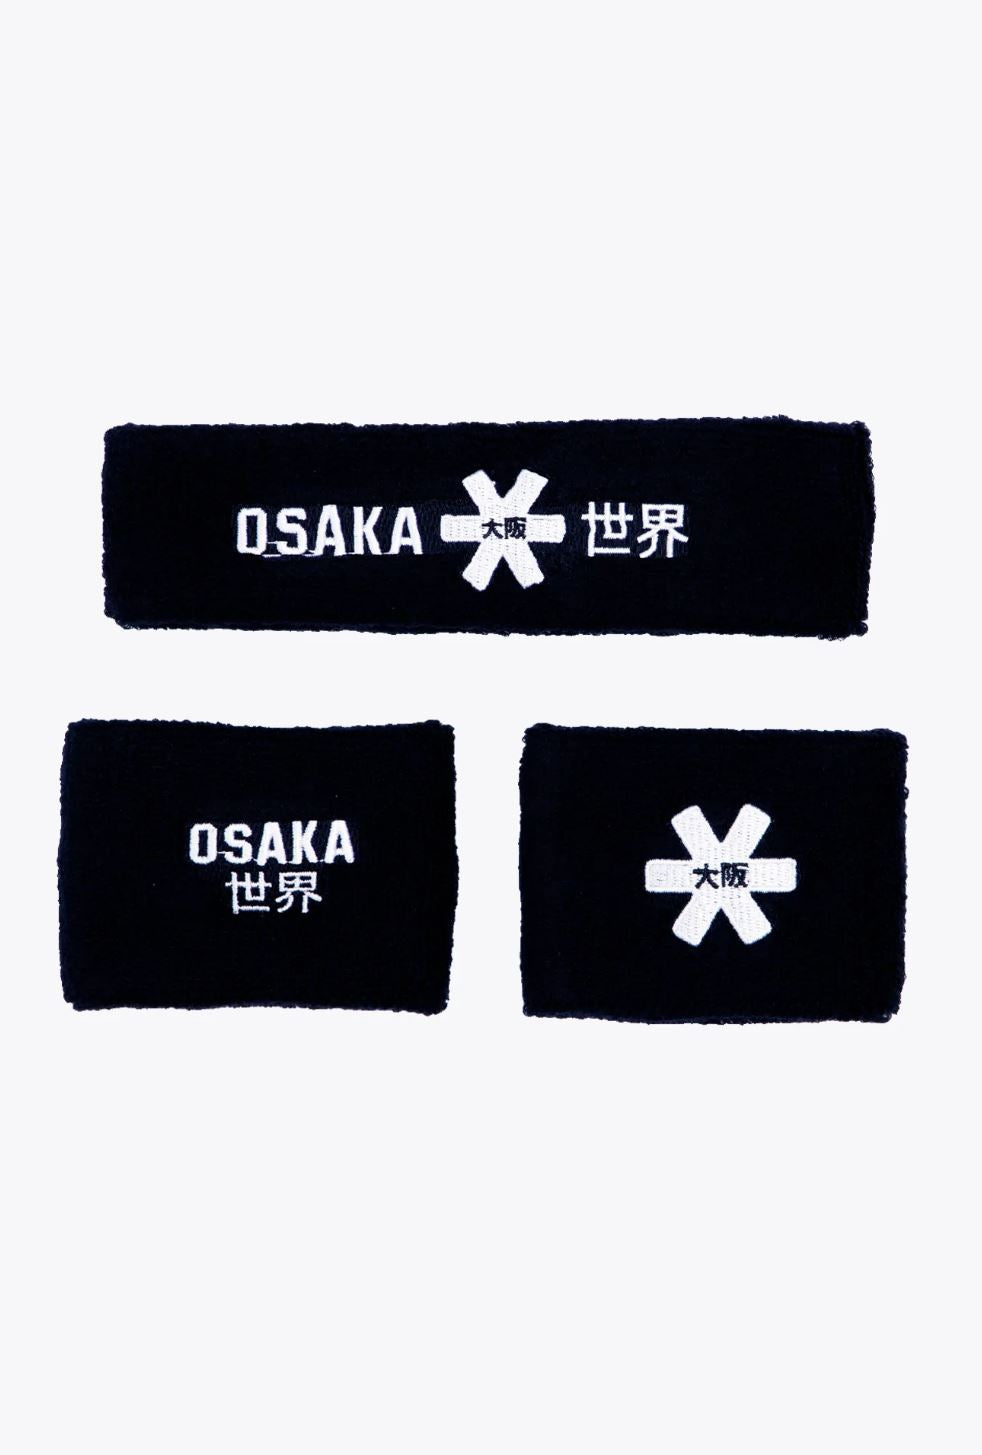 Osaka Sweatband Set (French Navy)